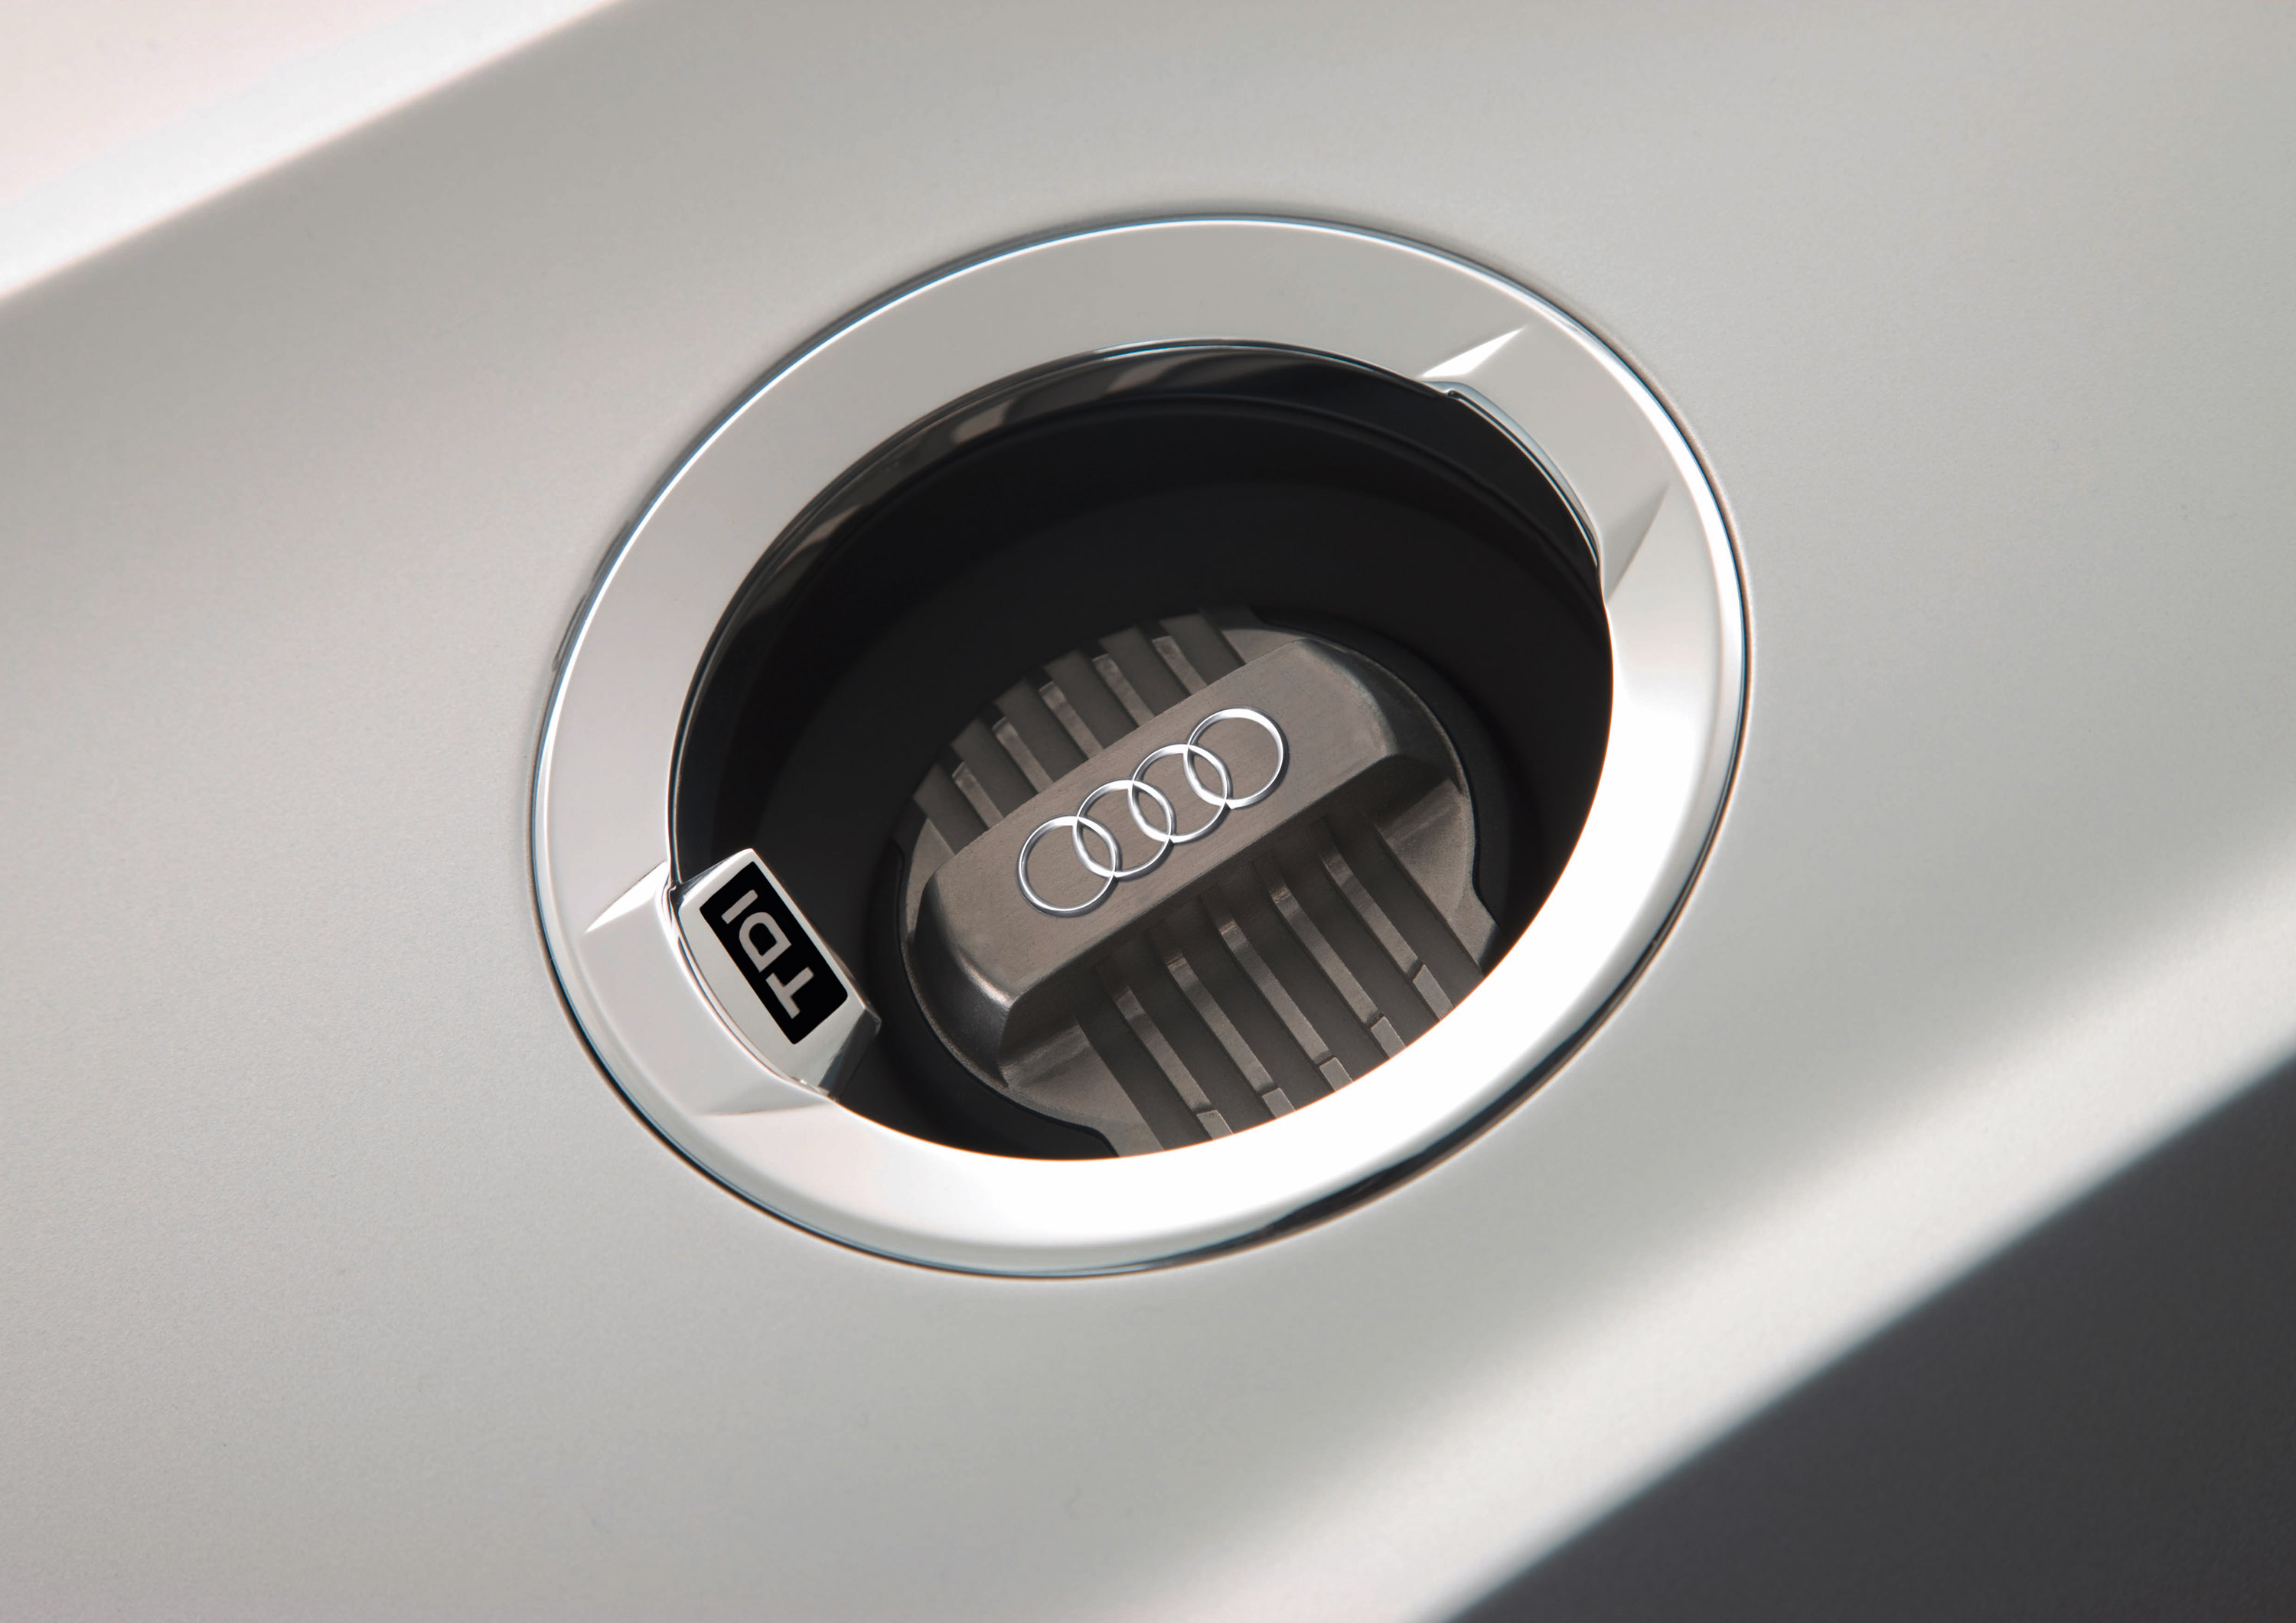 Audi e-tron Spyder concept